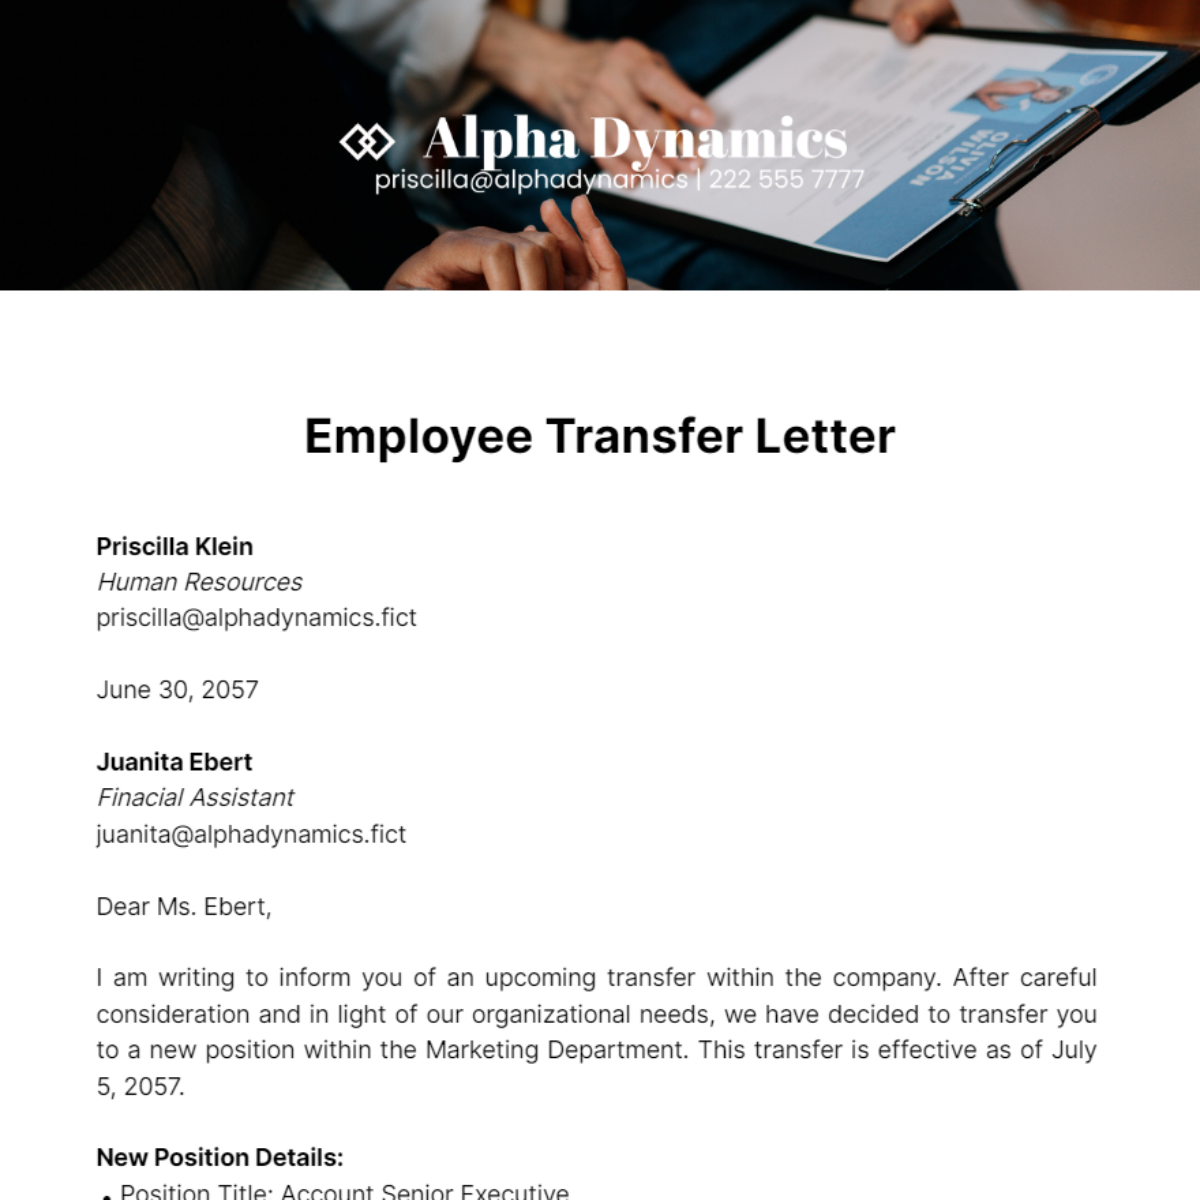 Employee Transfer Letter Template